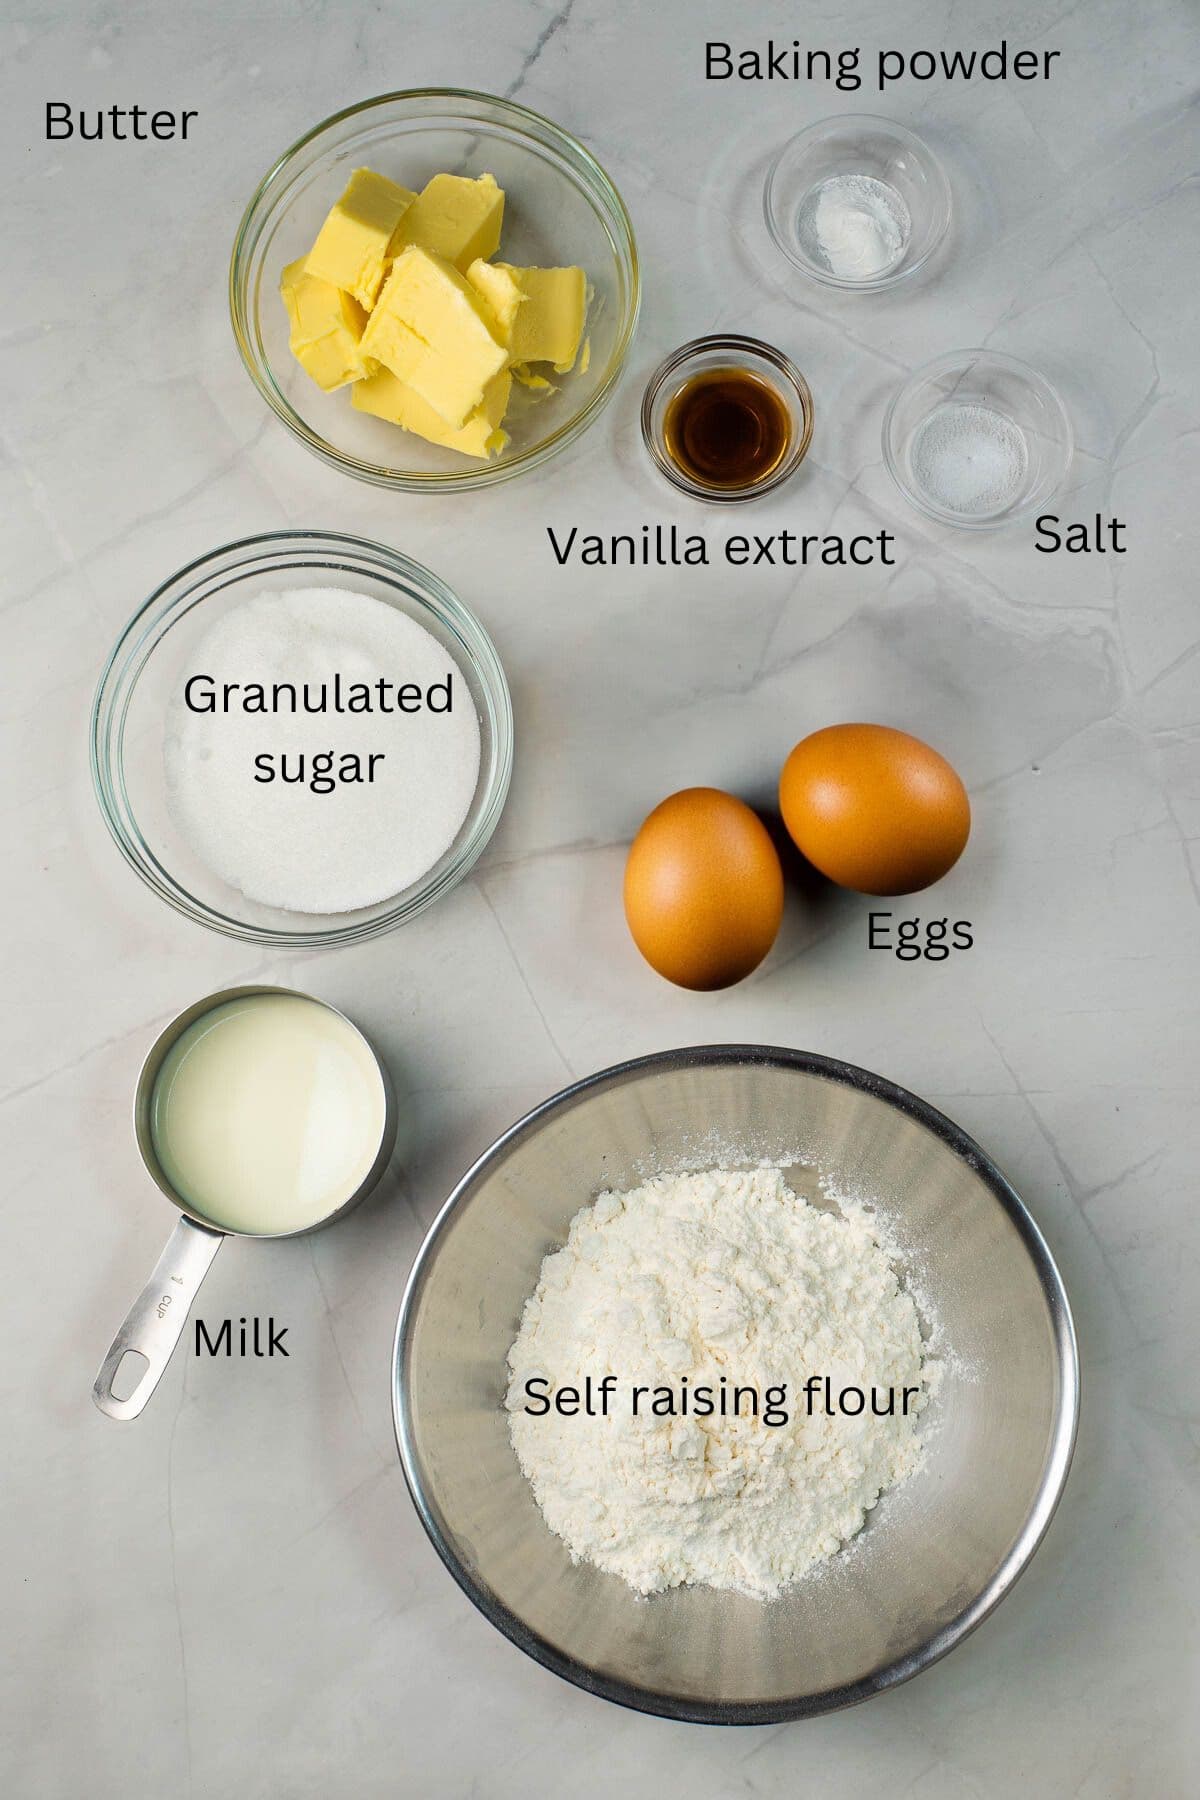 Butter, vanilla extract, salt, sugar, eggs, milk, self raising flour and baking powder against a marble background.